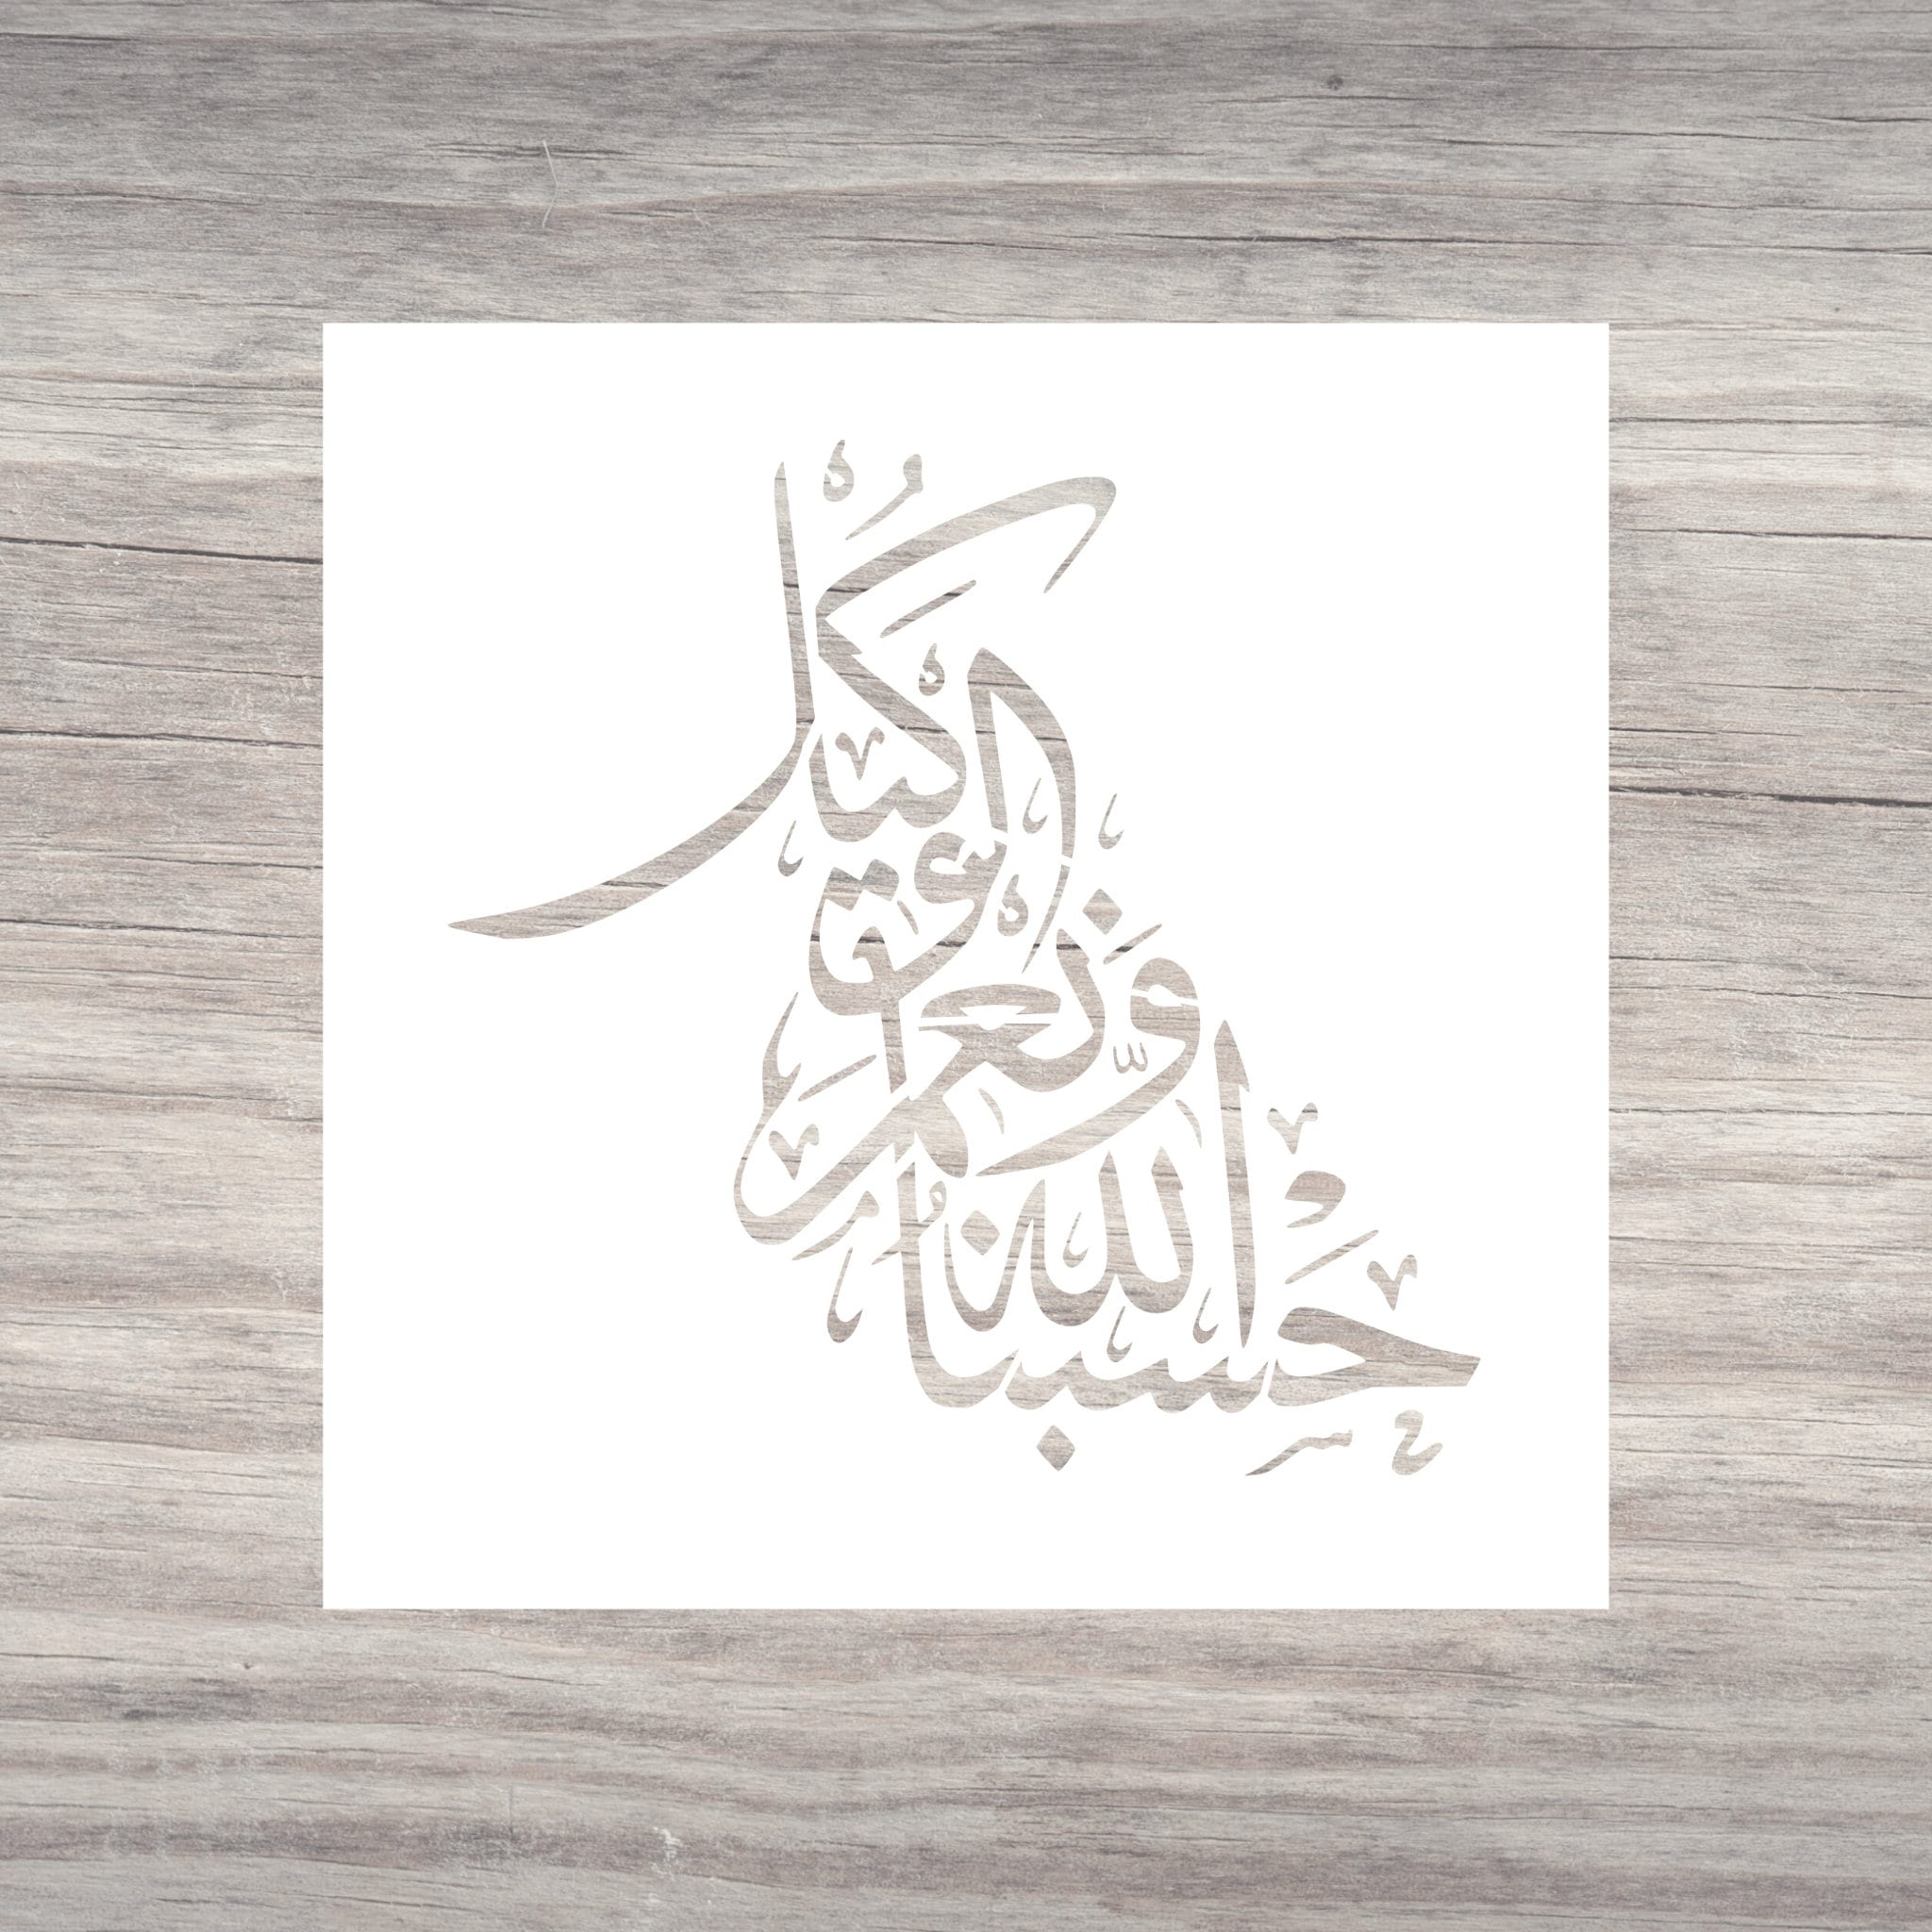 Shahada Islamic Art Stencil, 6.5 x 6.5 inch (S) - Shahada Islamic Oath of Five Pillars of Islam Arabic Calligraphy Stencils for Painting Template